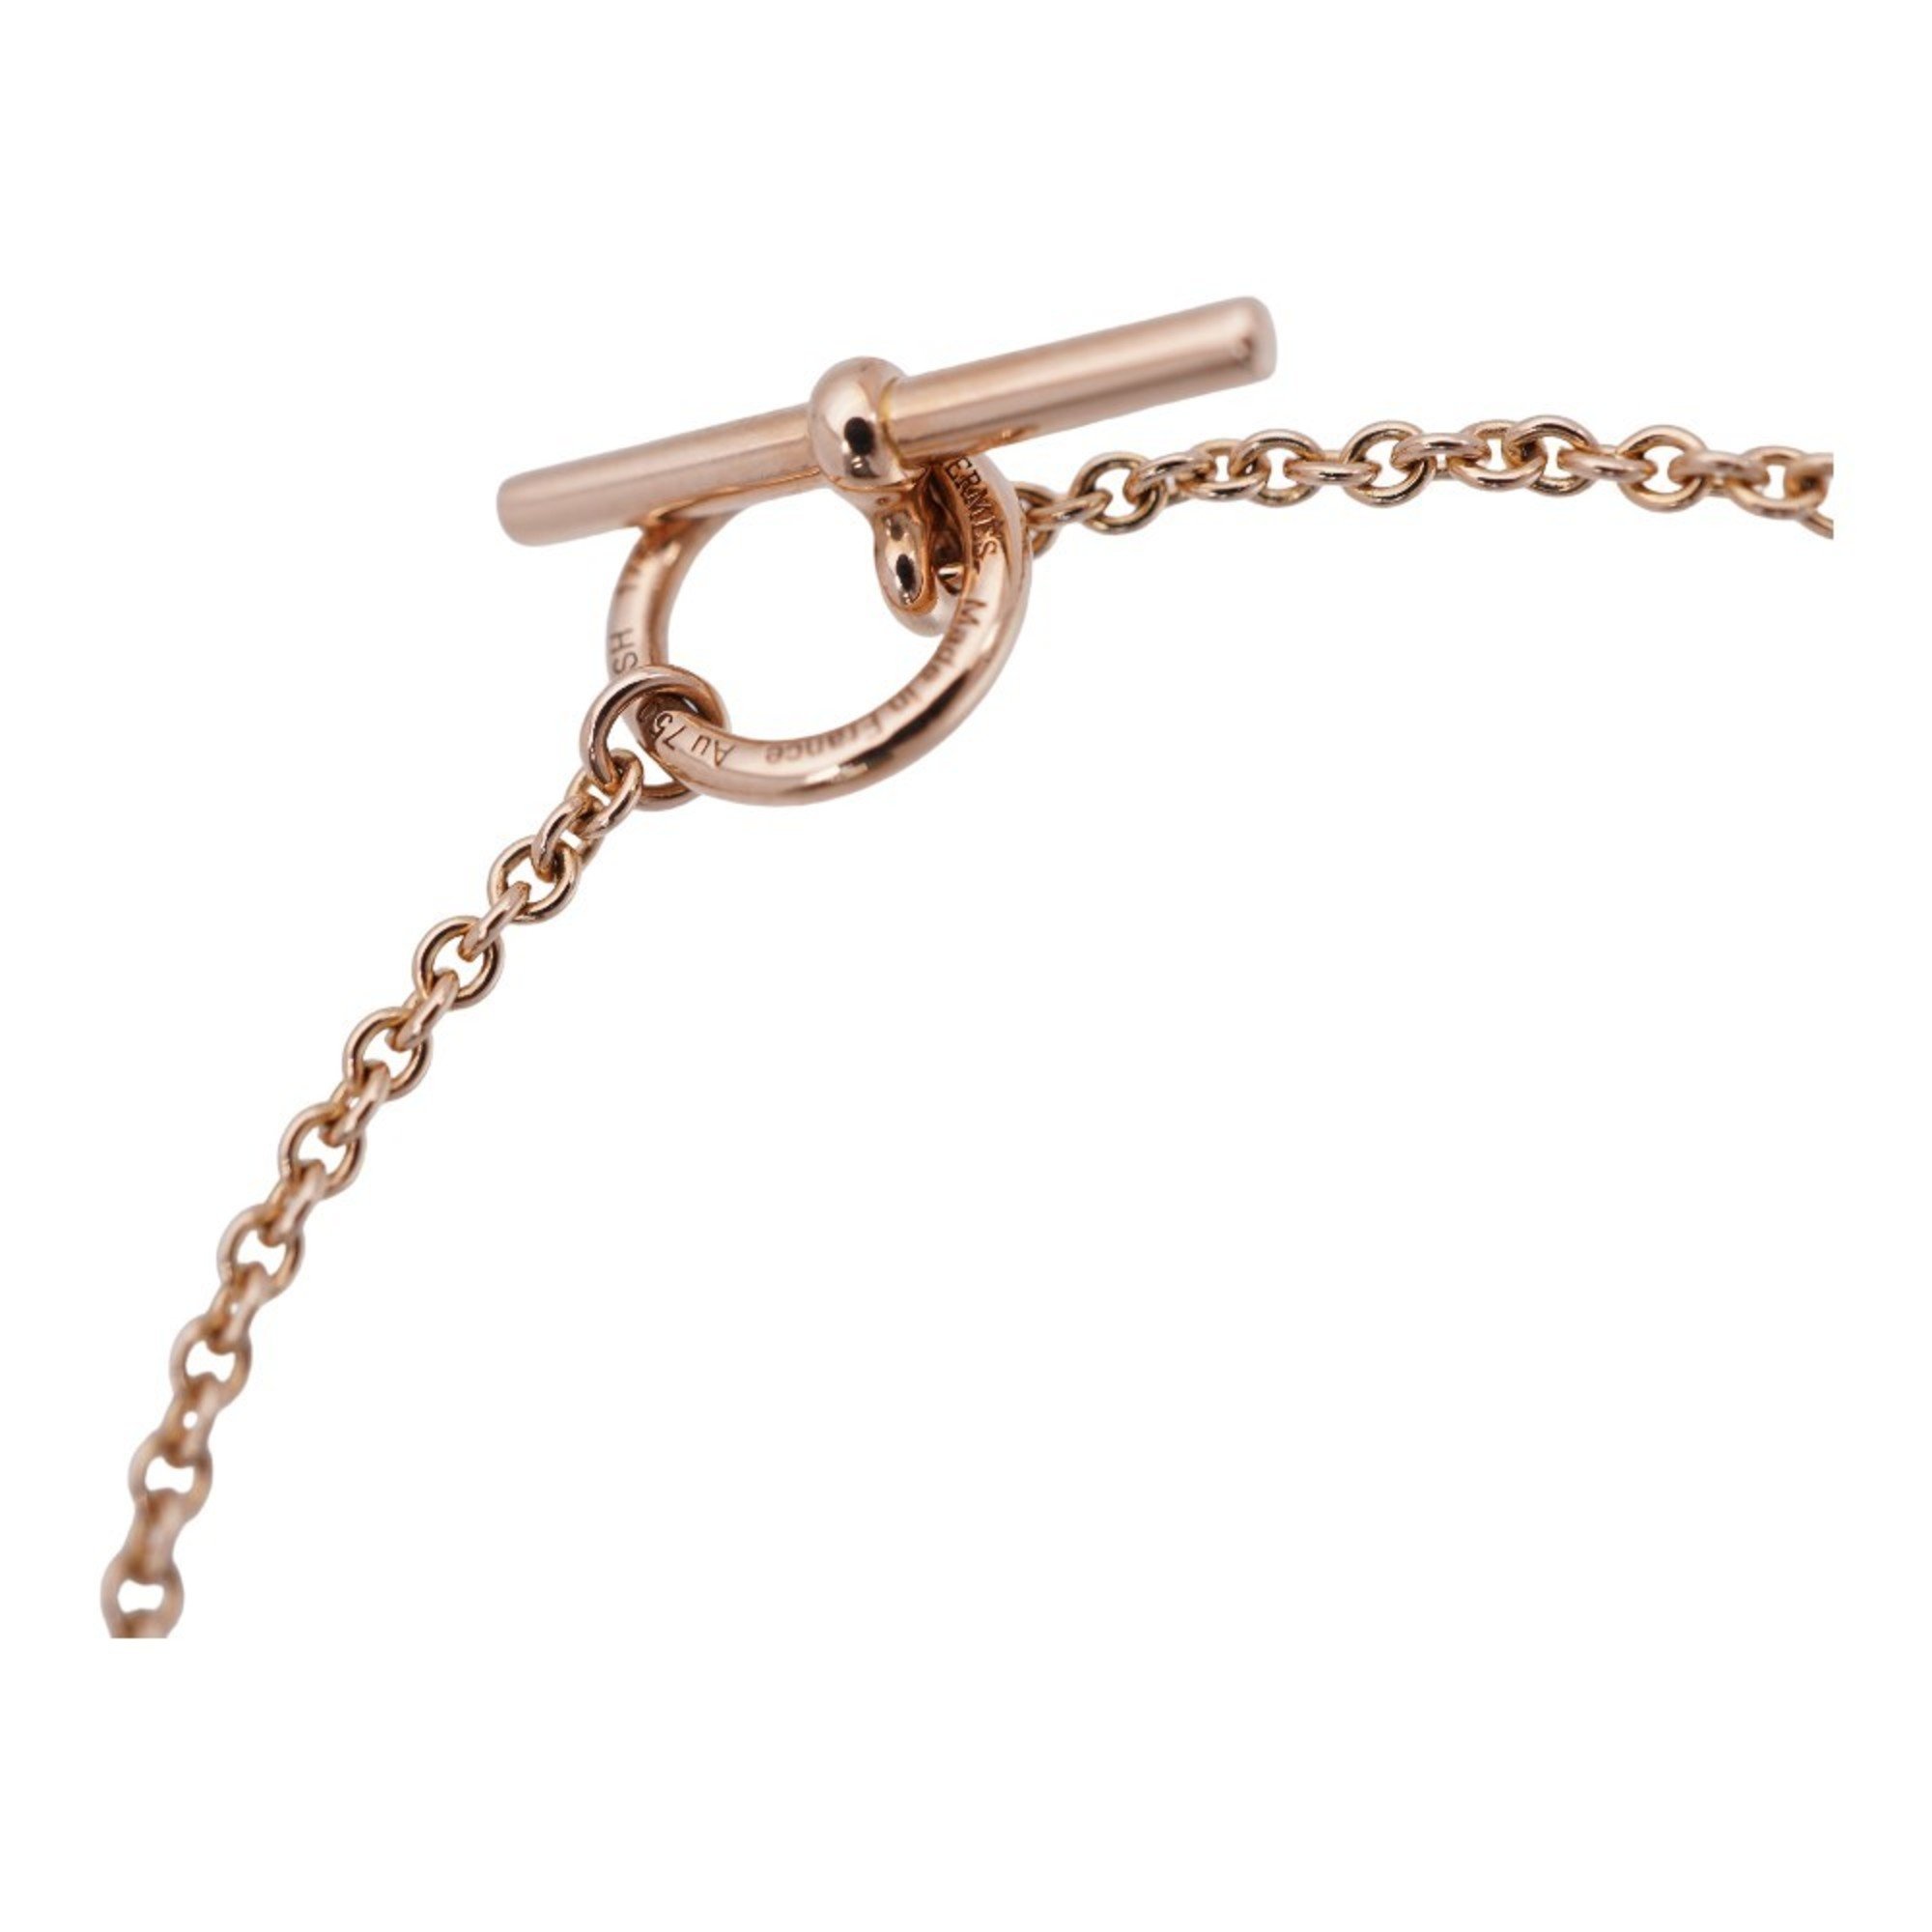 Hermes Chaine d'Ancle Punk K18PG Bracelet 750PG Pink Gold 0034HERMES Ladies 6A0034IEG6